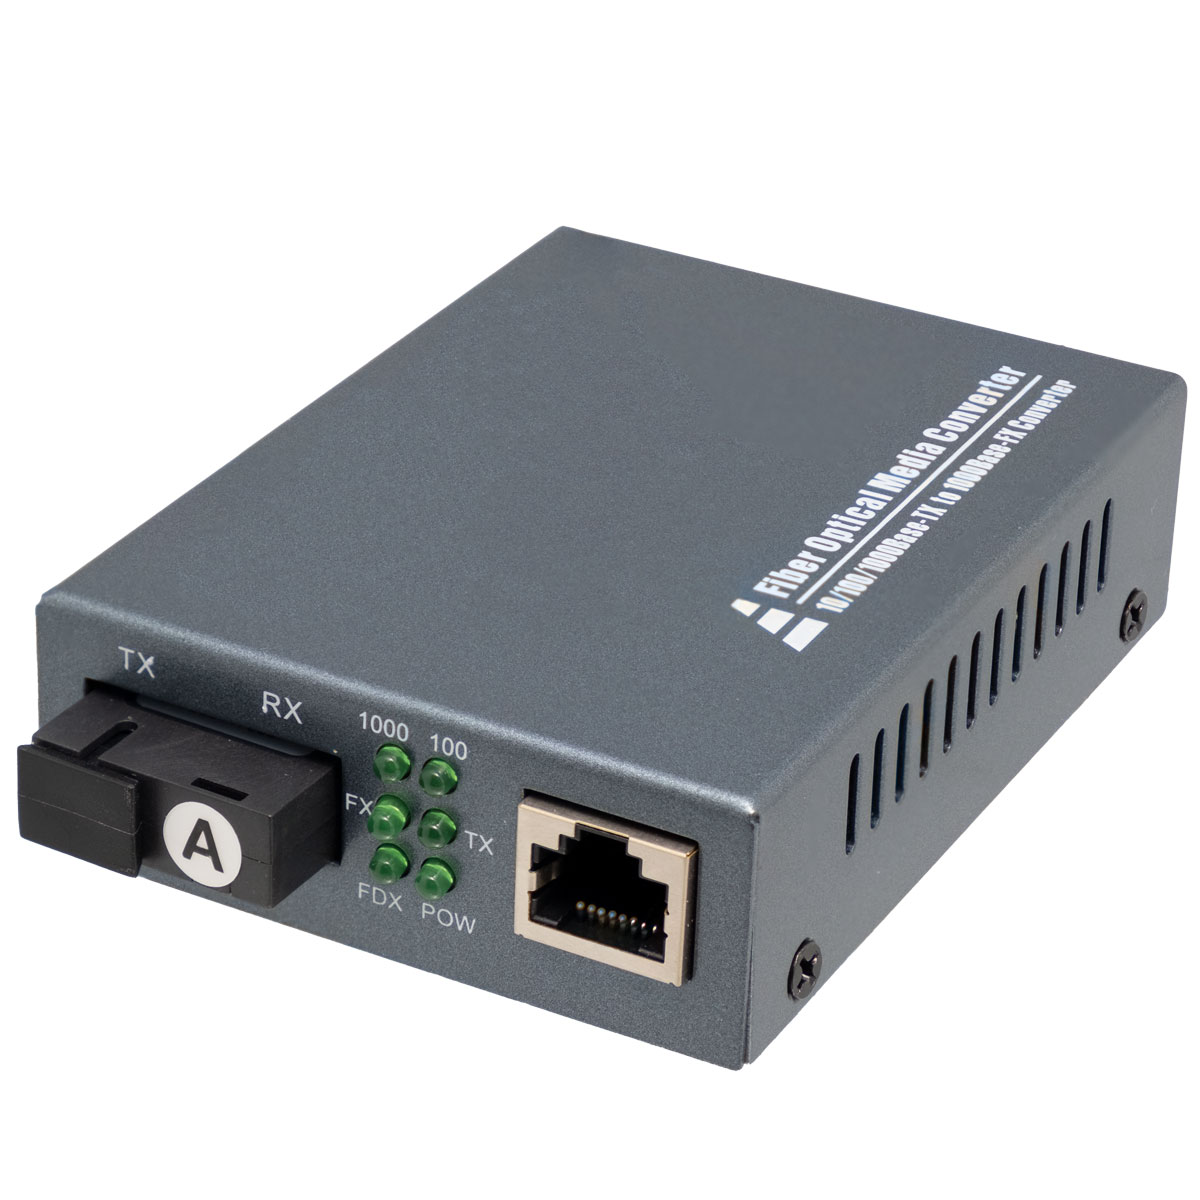 Optical media converter SC Simplex to RJ45, T1310nm R1550nm